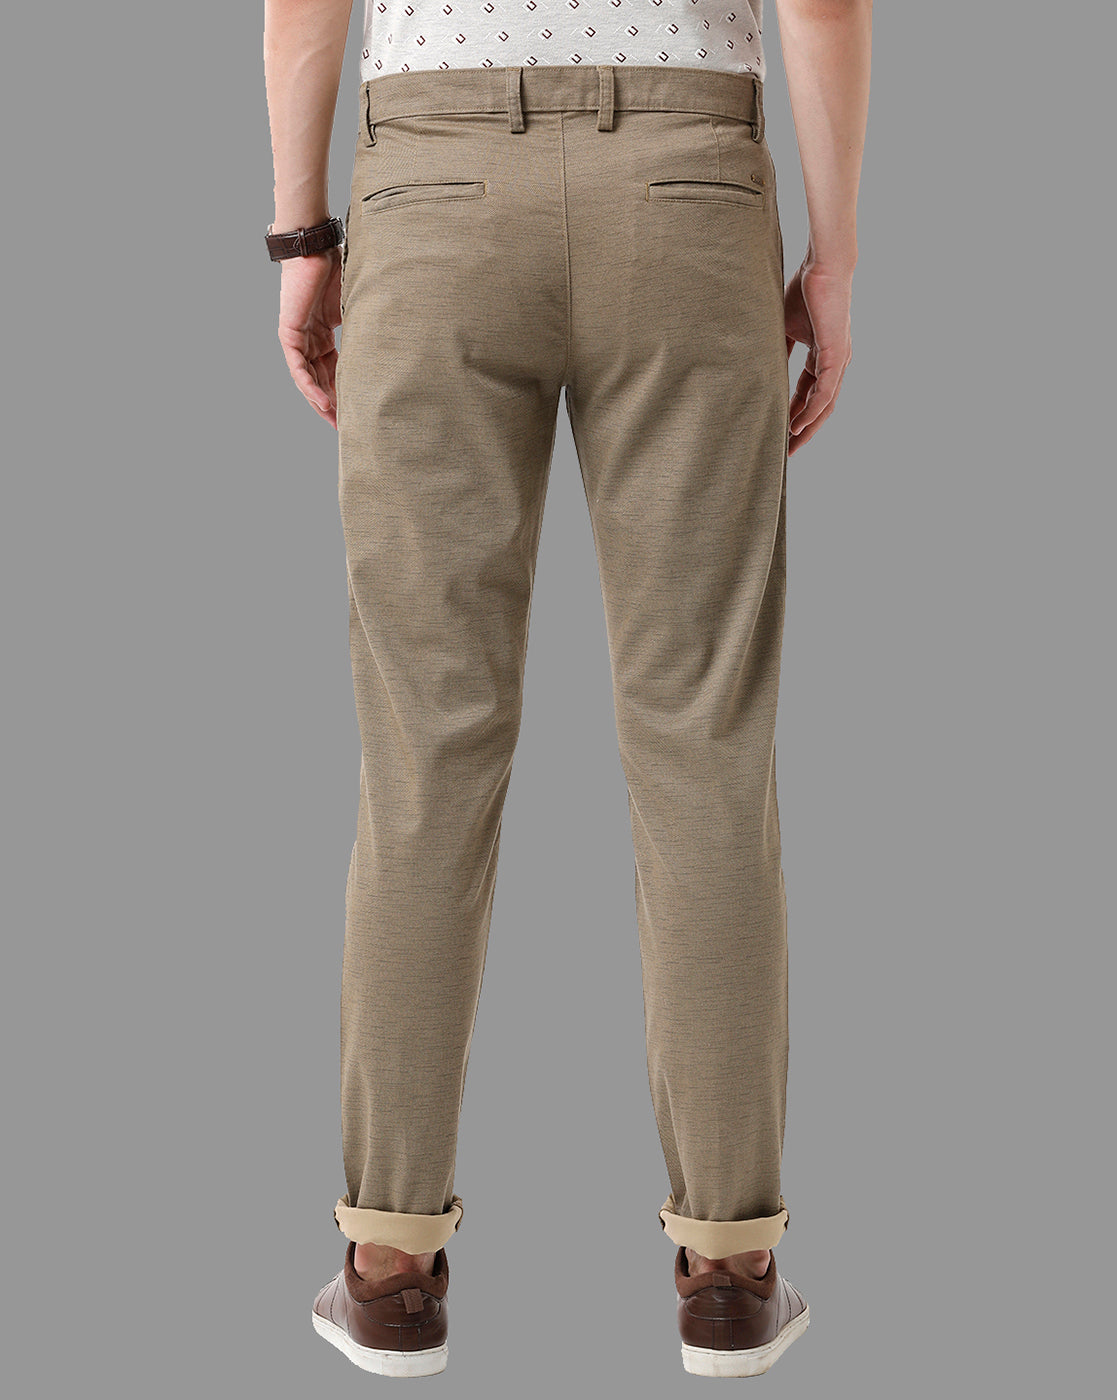 Buy Beige Trousers  Pants for Men by CLASSIC POLO Online  Ajiocom